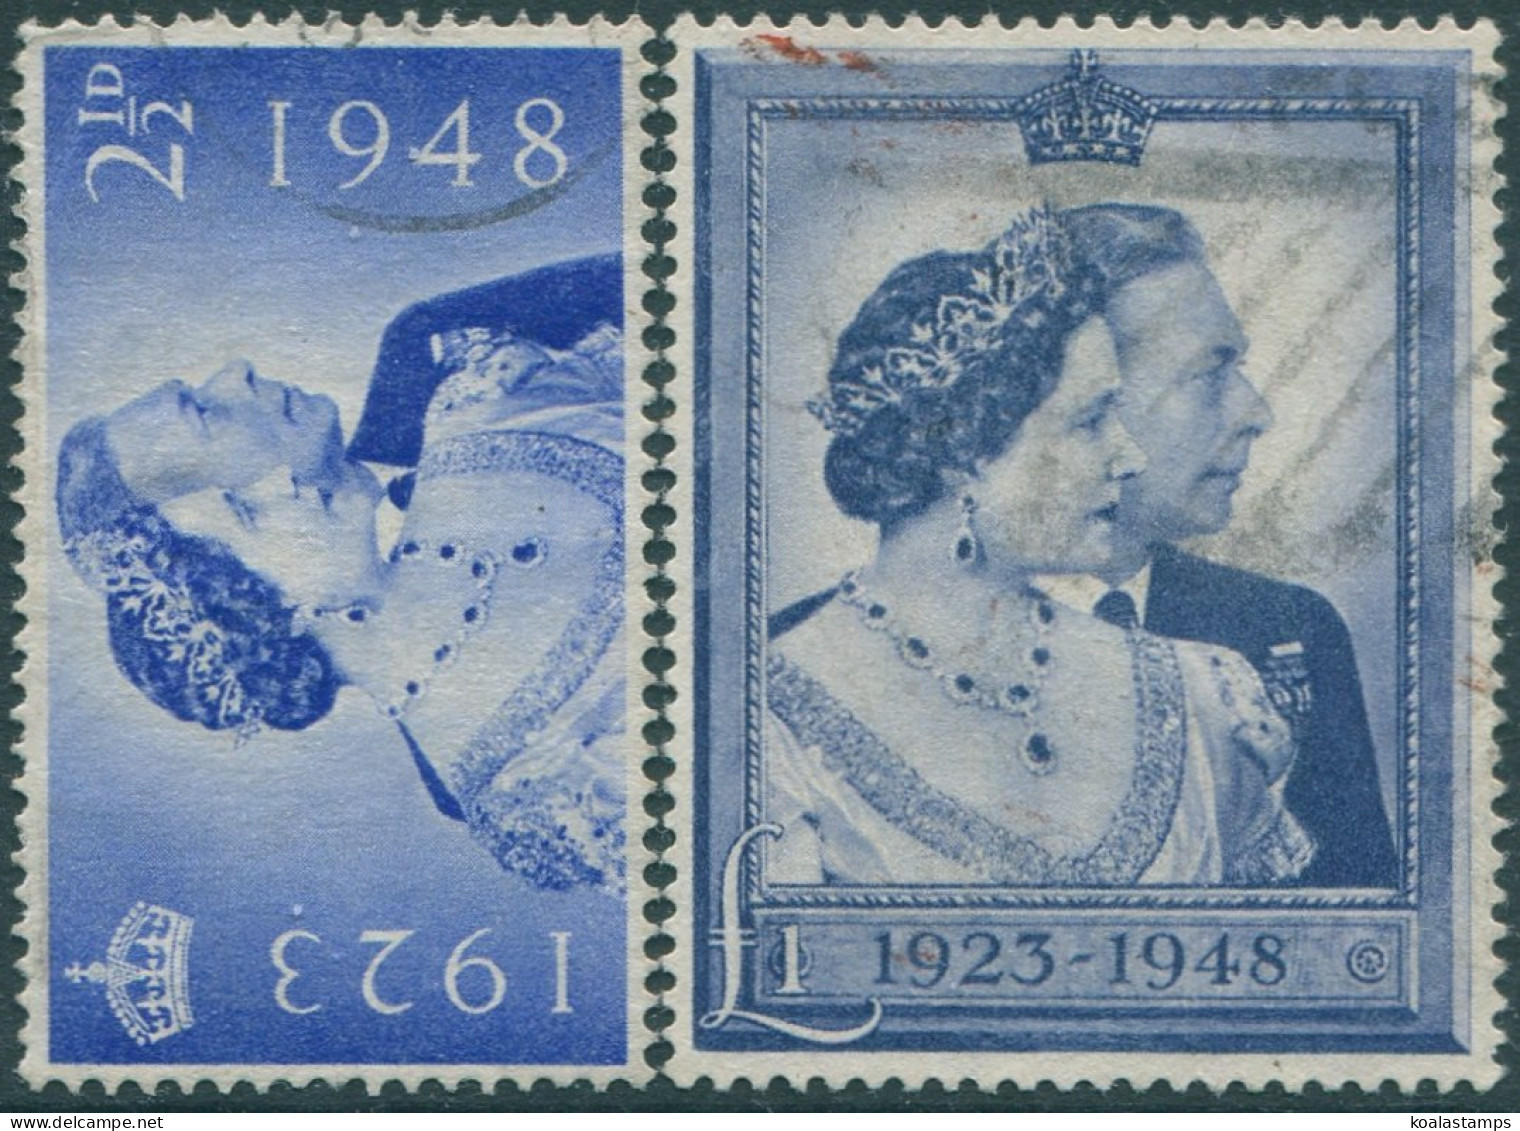 Great Britain 1948 SG493-494 KGVI Silver Wedding Set FU (amd) - Unclassified